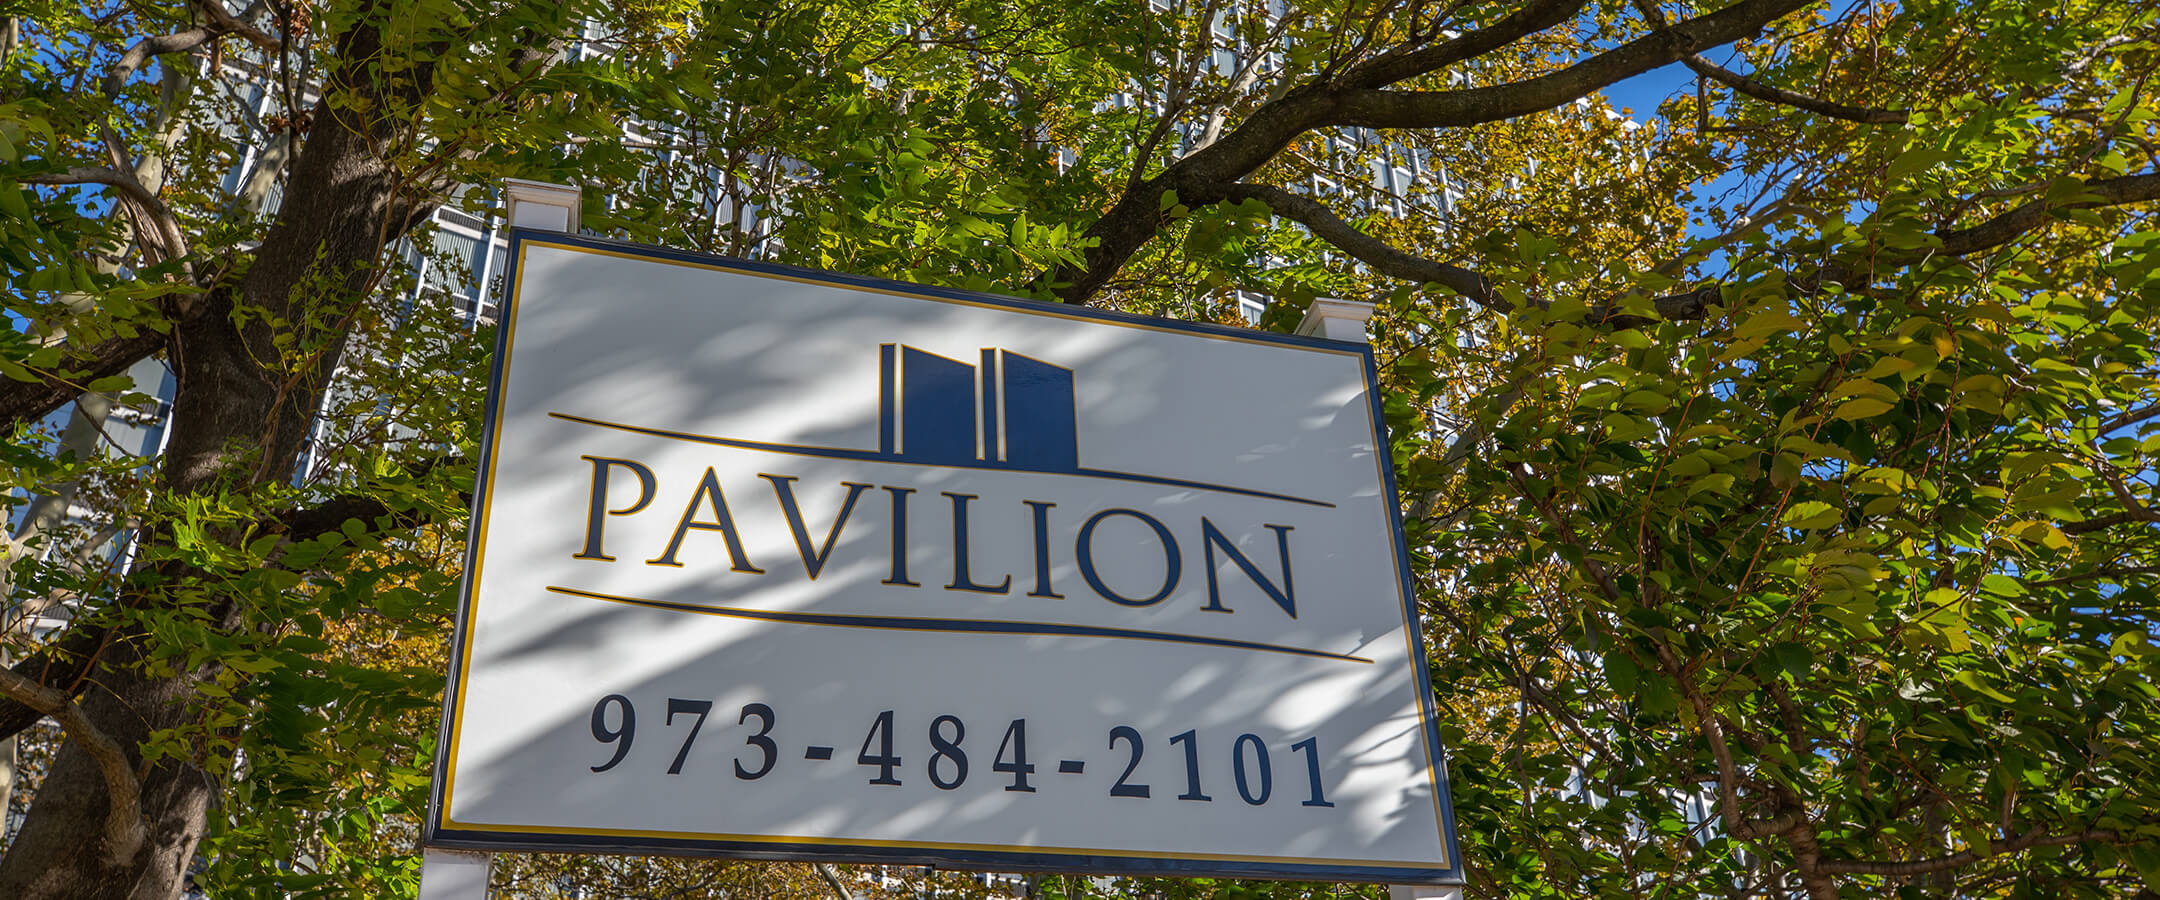 Pavilion Apartments Apartments In Newark